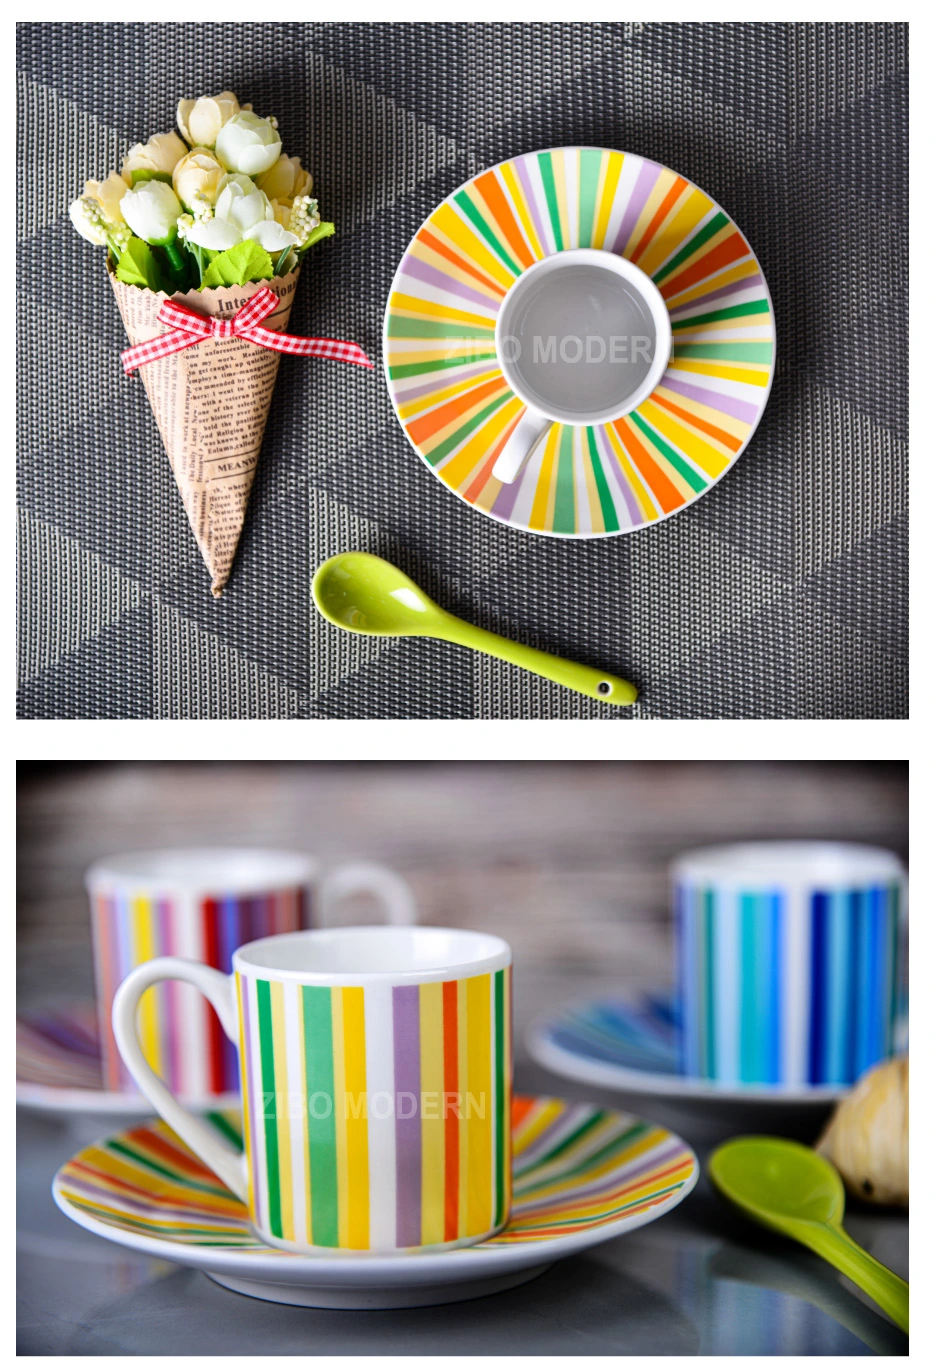 4 Oz Rainbow Striped Multi-Color Ceramic Stoneware Coffee / Tea Cup with Saucer